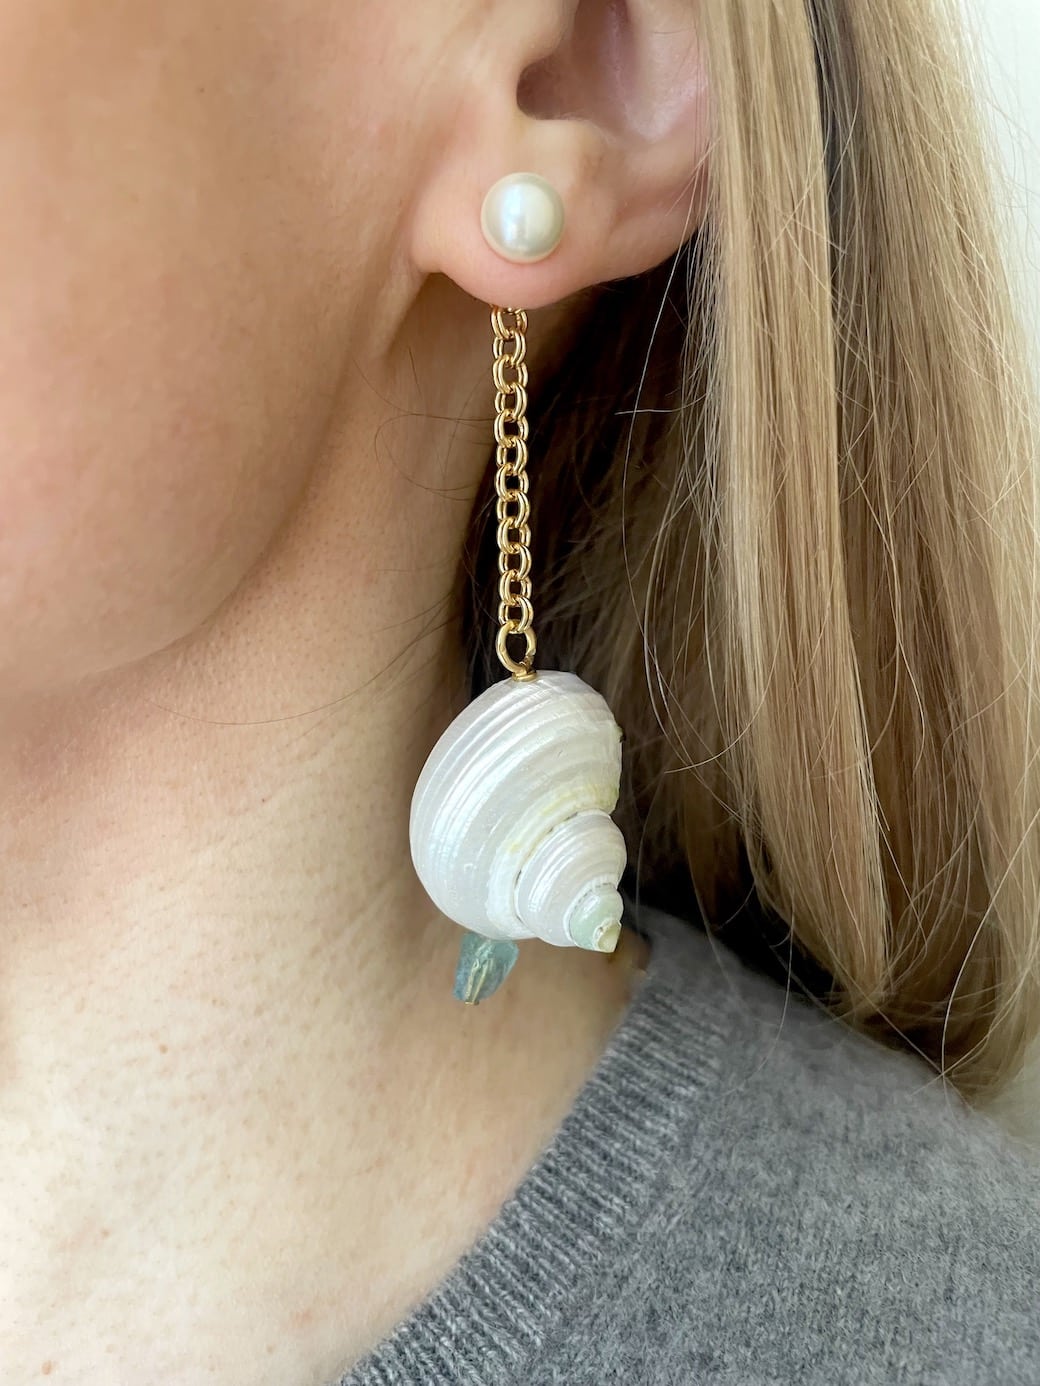 BO earrings Longues Coquillages Apatite bleue by Sande Paris